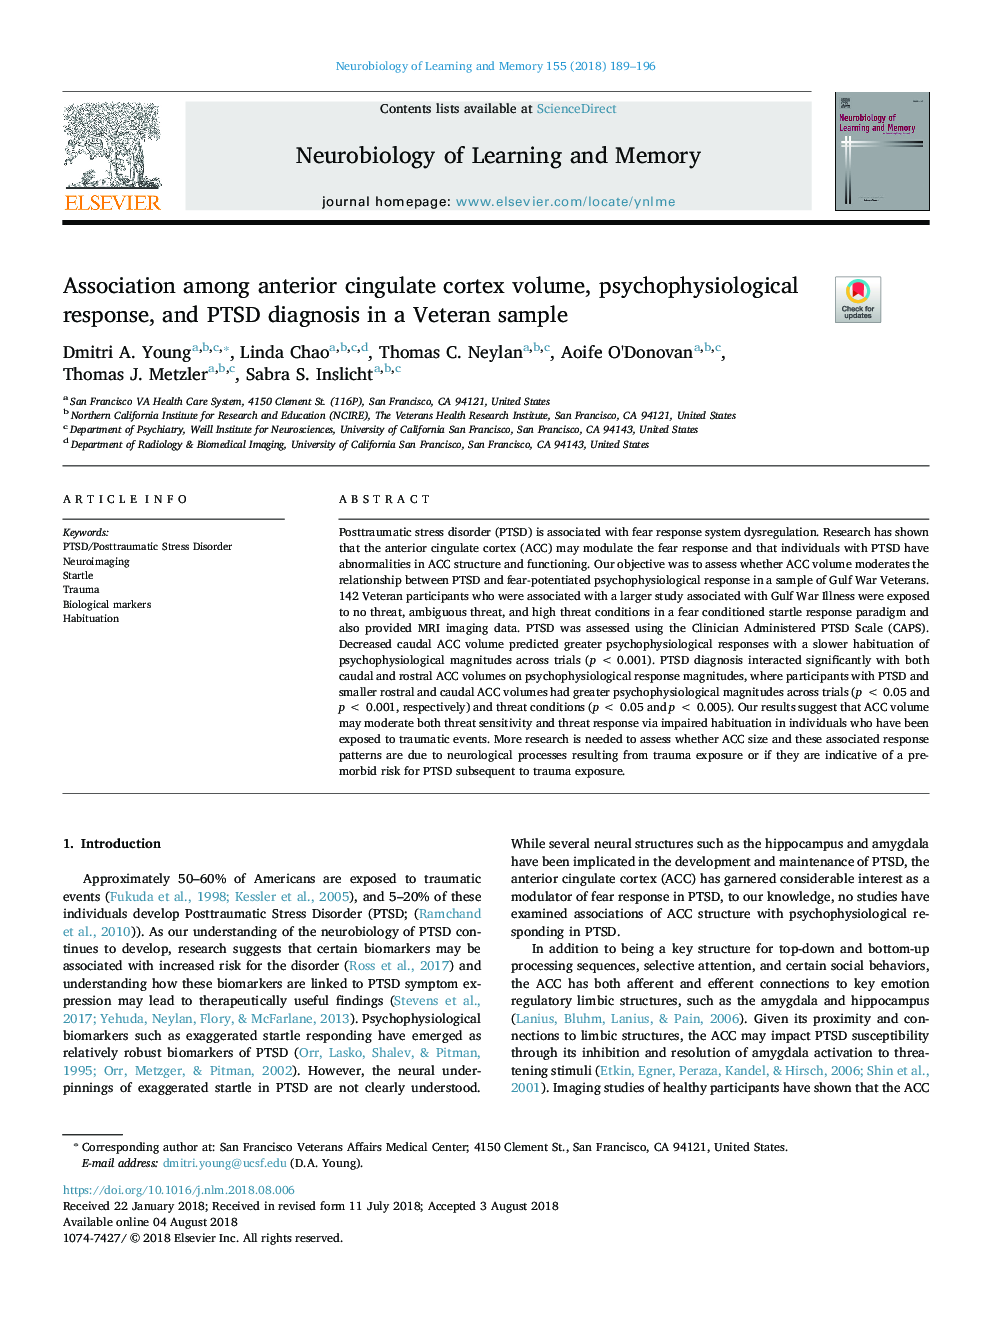 Association among anterior cingulate cortex volume, psychophysiological response, and PTSD diagnosis in a Veteran sample